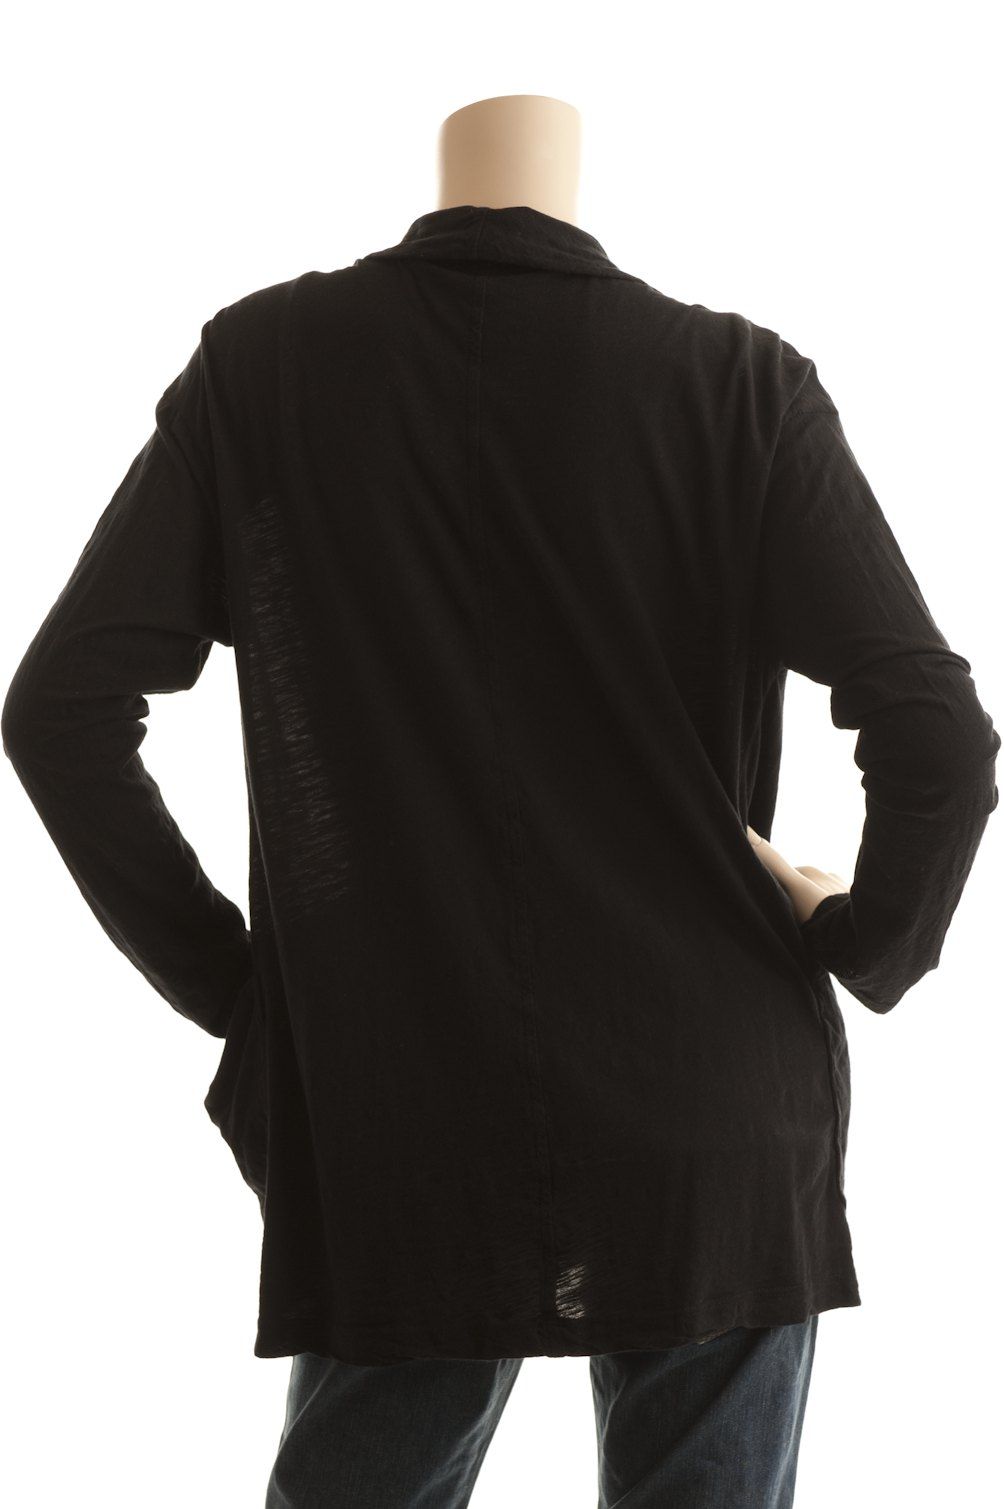 James Perse Womens Black Cotton Cardi Sweater 1 2 3 4